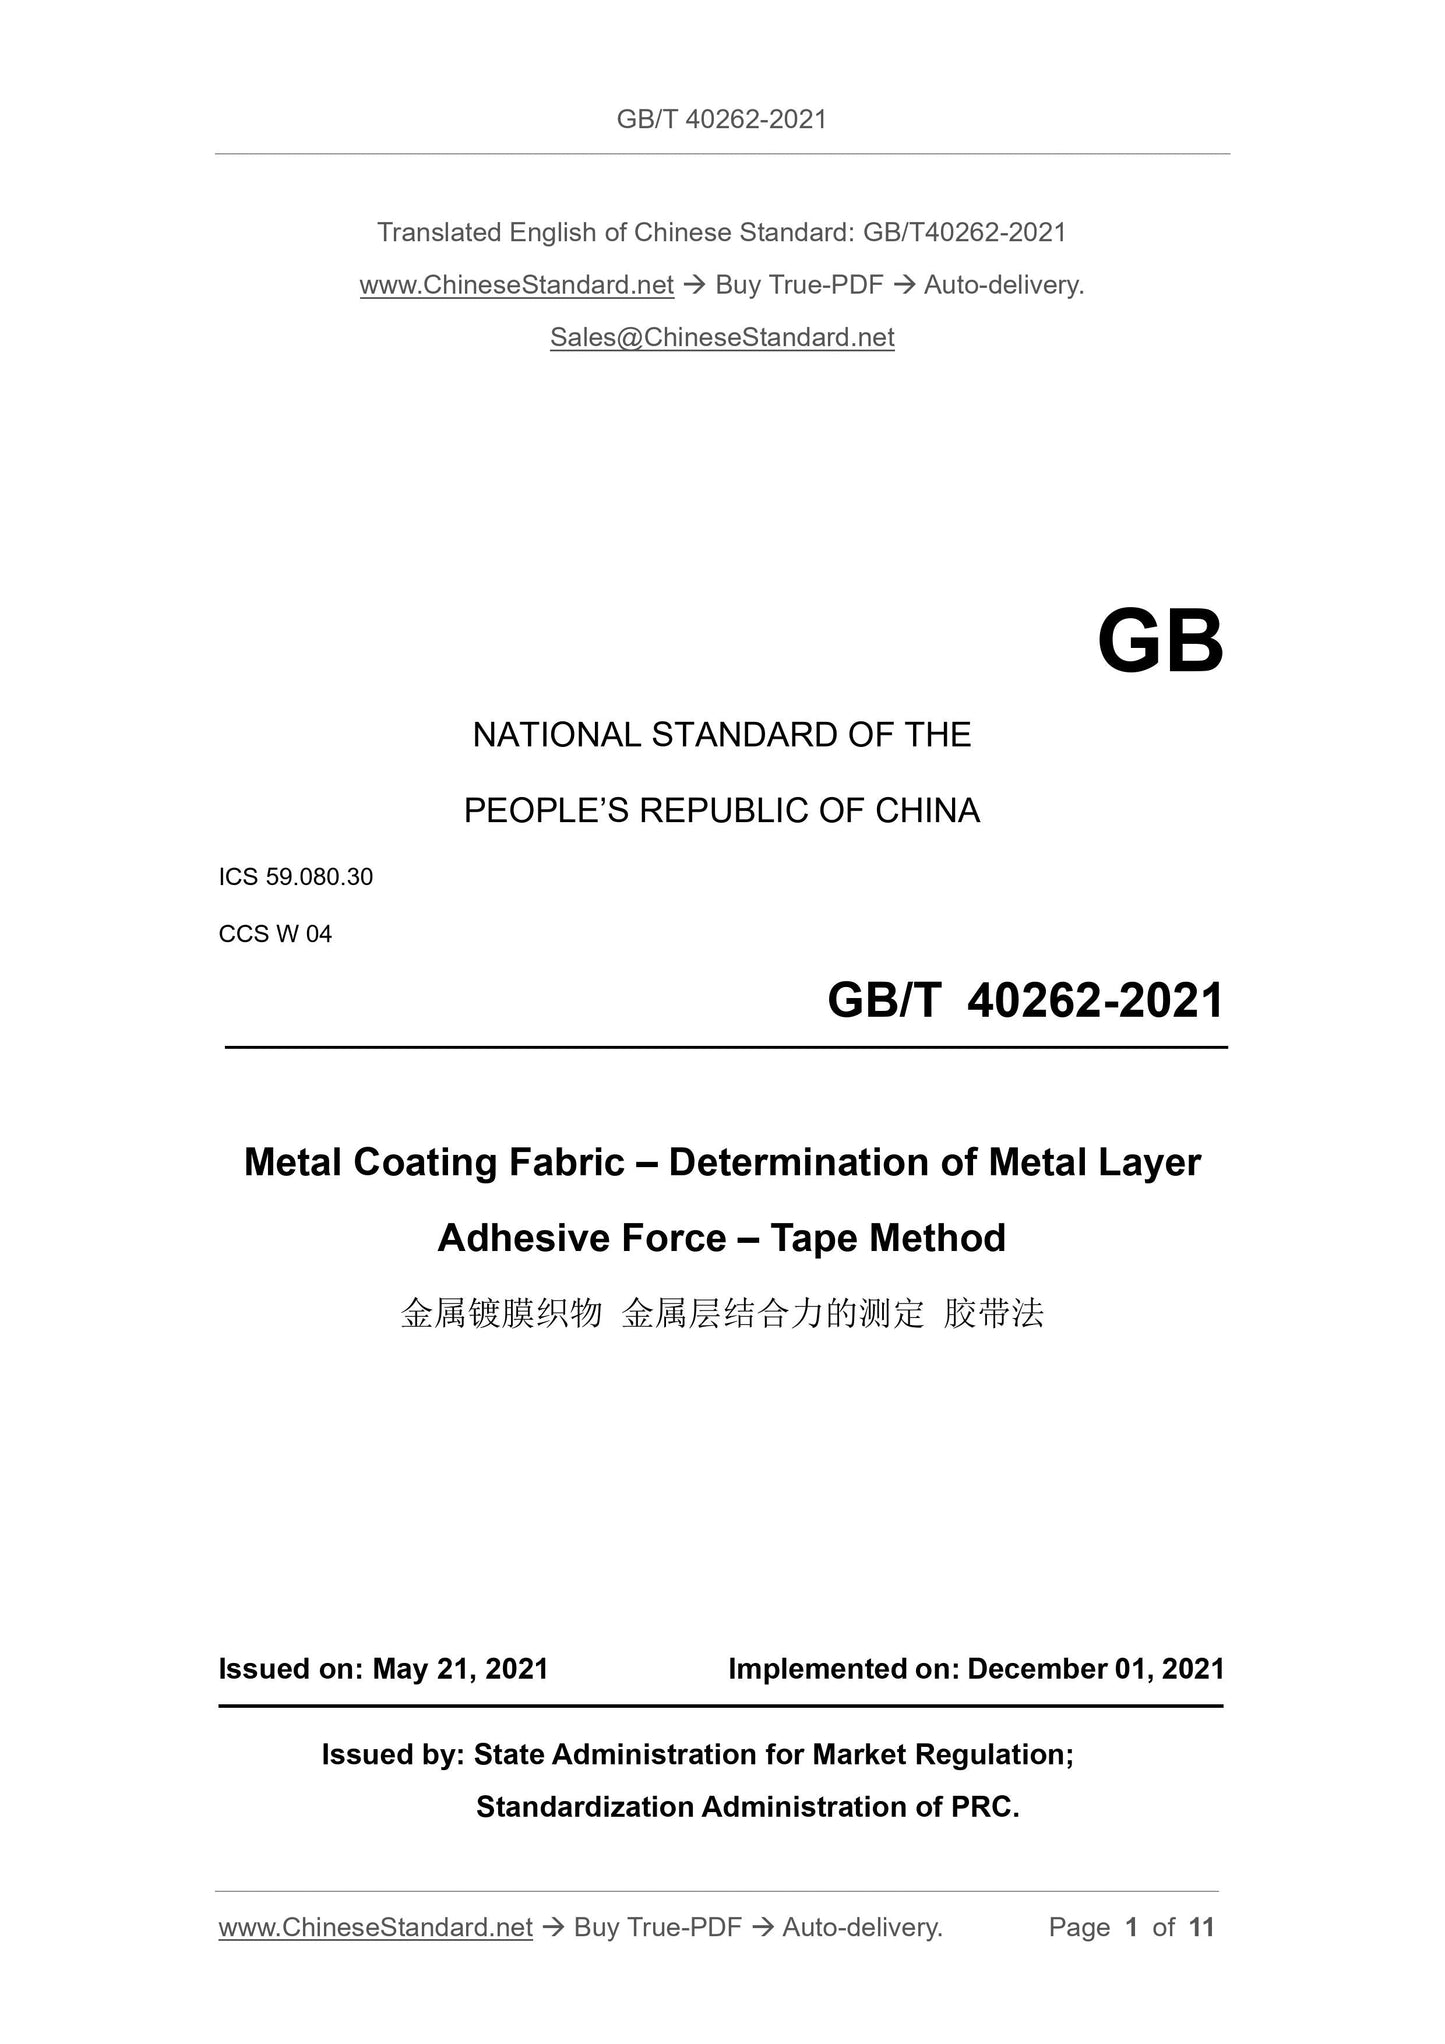 GBT40262-2021 Page 1